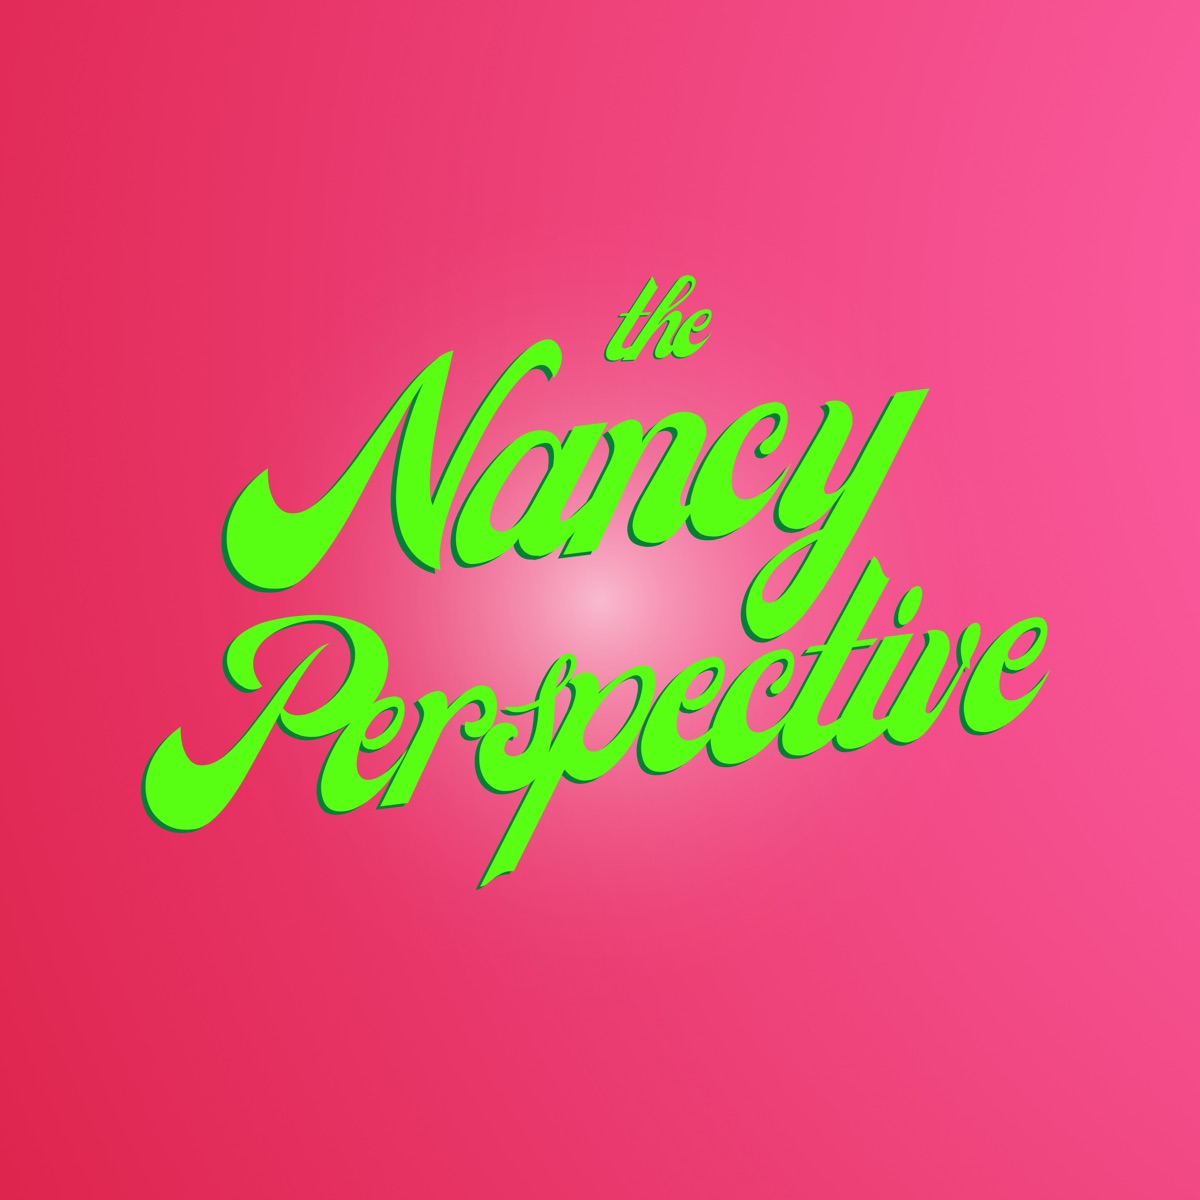 Nancy perspective podcast logo